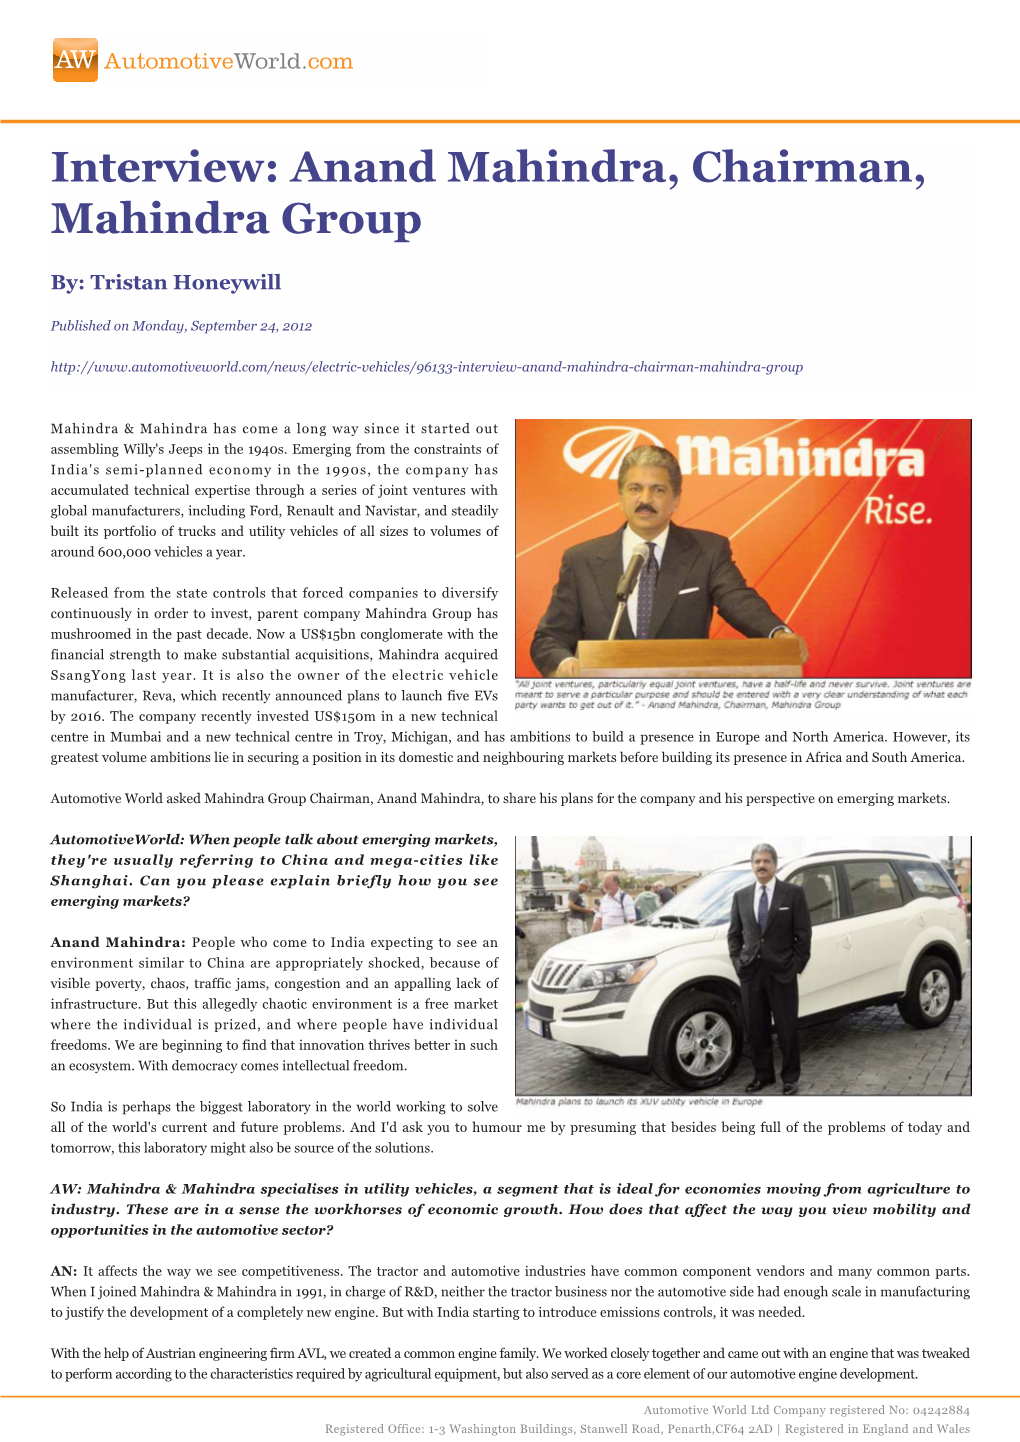 Anand Mahindra, Chairman, Mahindra Group